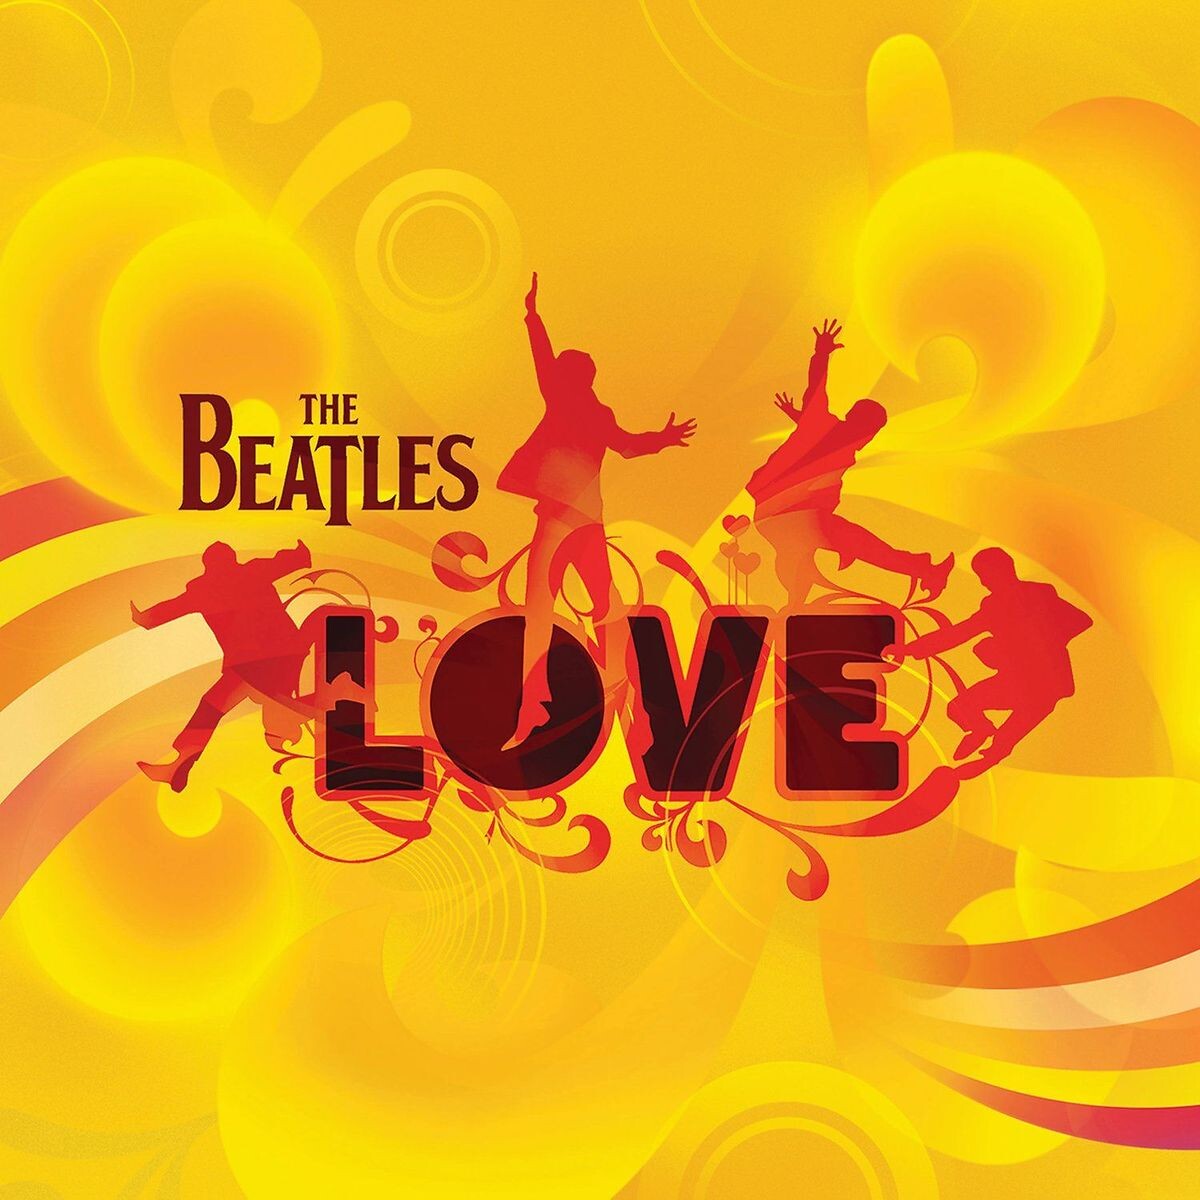 https://images.bravado.de/prod/product-assets/beatles-the/the-beatles-international-1/products/142366/web/309005/image-thumb__309005__3000x3000_original/The-Beatles-Love-Vinyl-142366-309005.de9fc606.jpg